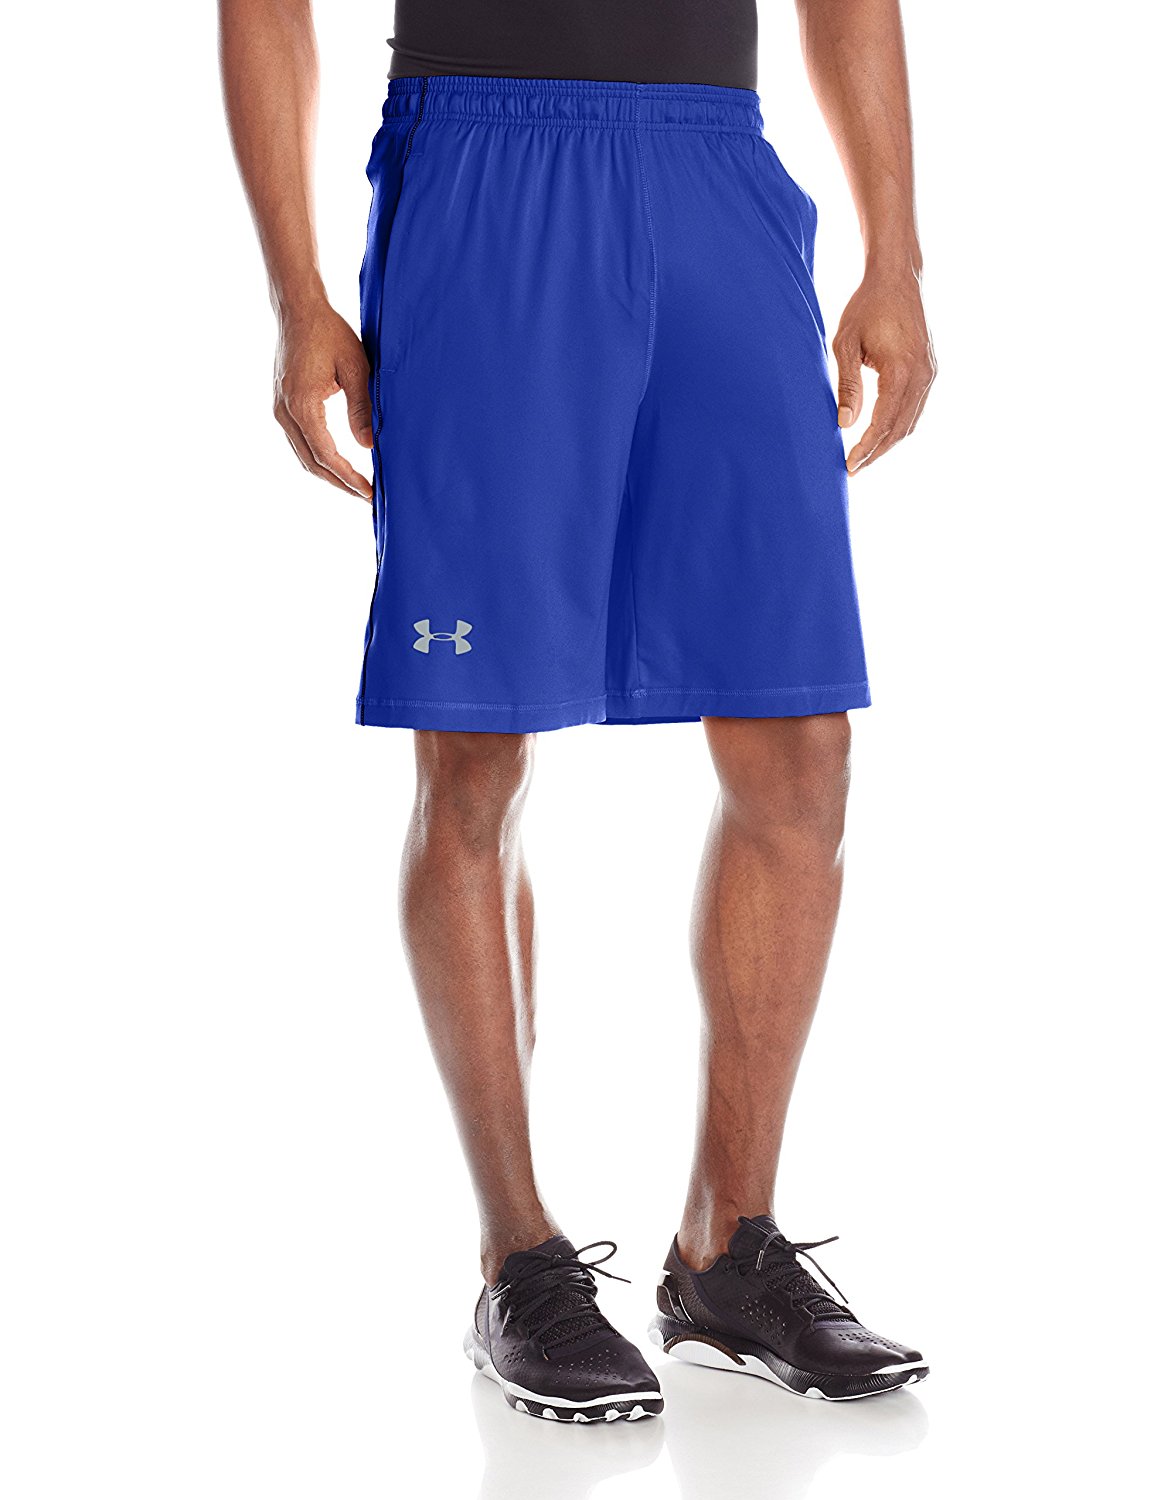 Auyz Mens Basketball Shorts Athletic Gym Running Training Workout Shorts with Pockets 